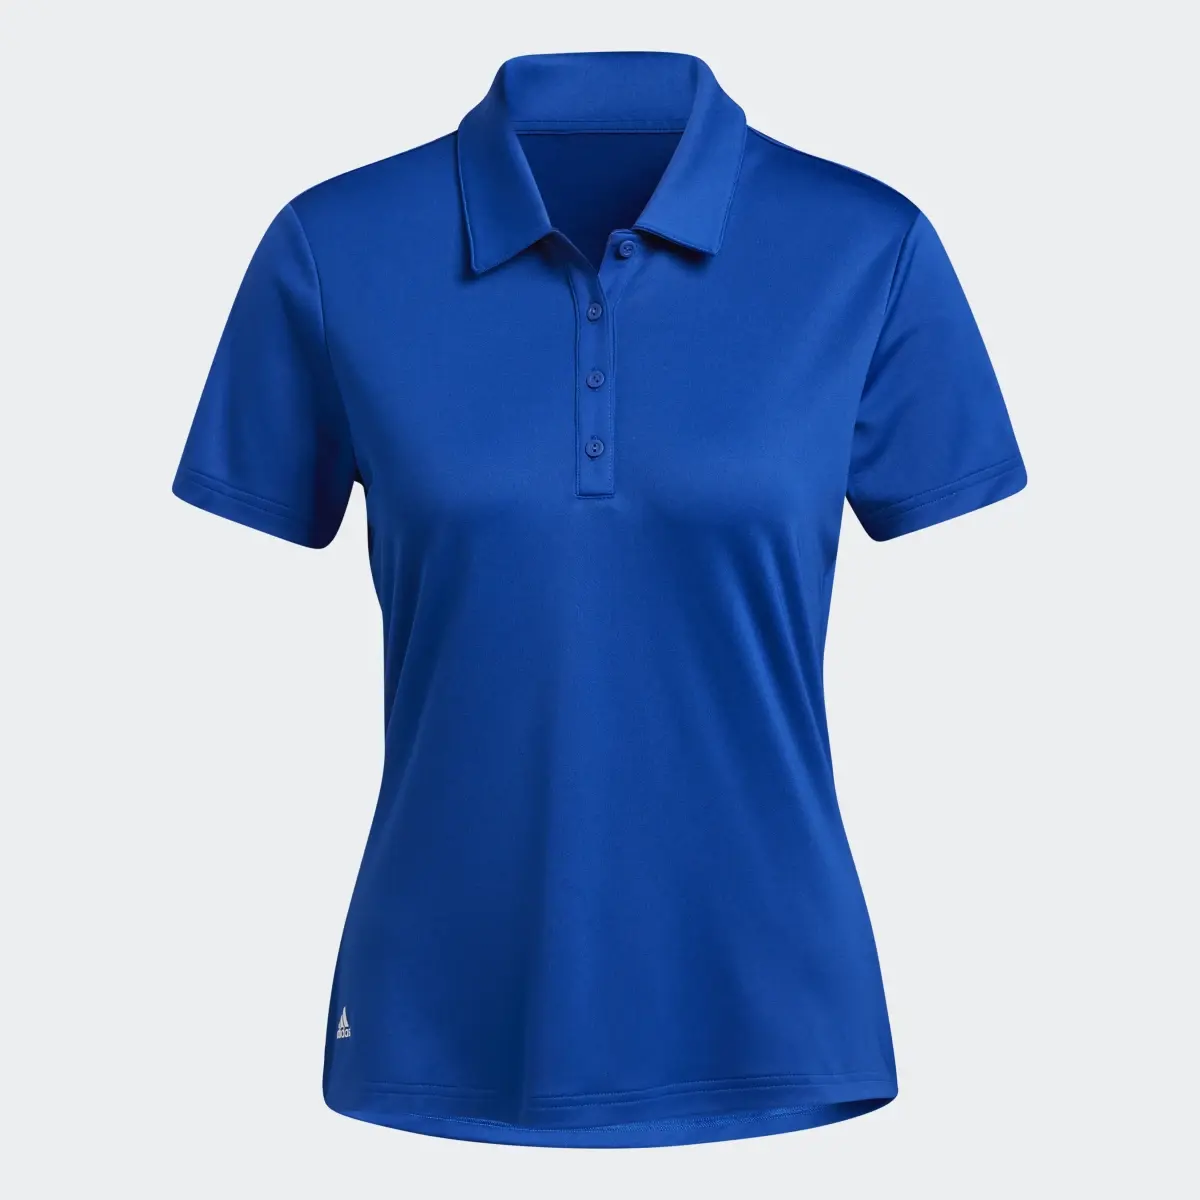 Adidas Performance Primegreen Golf Polo Shirt. 1